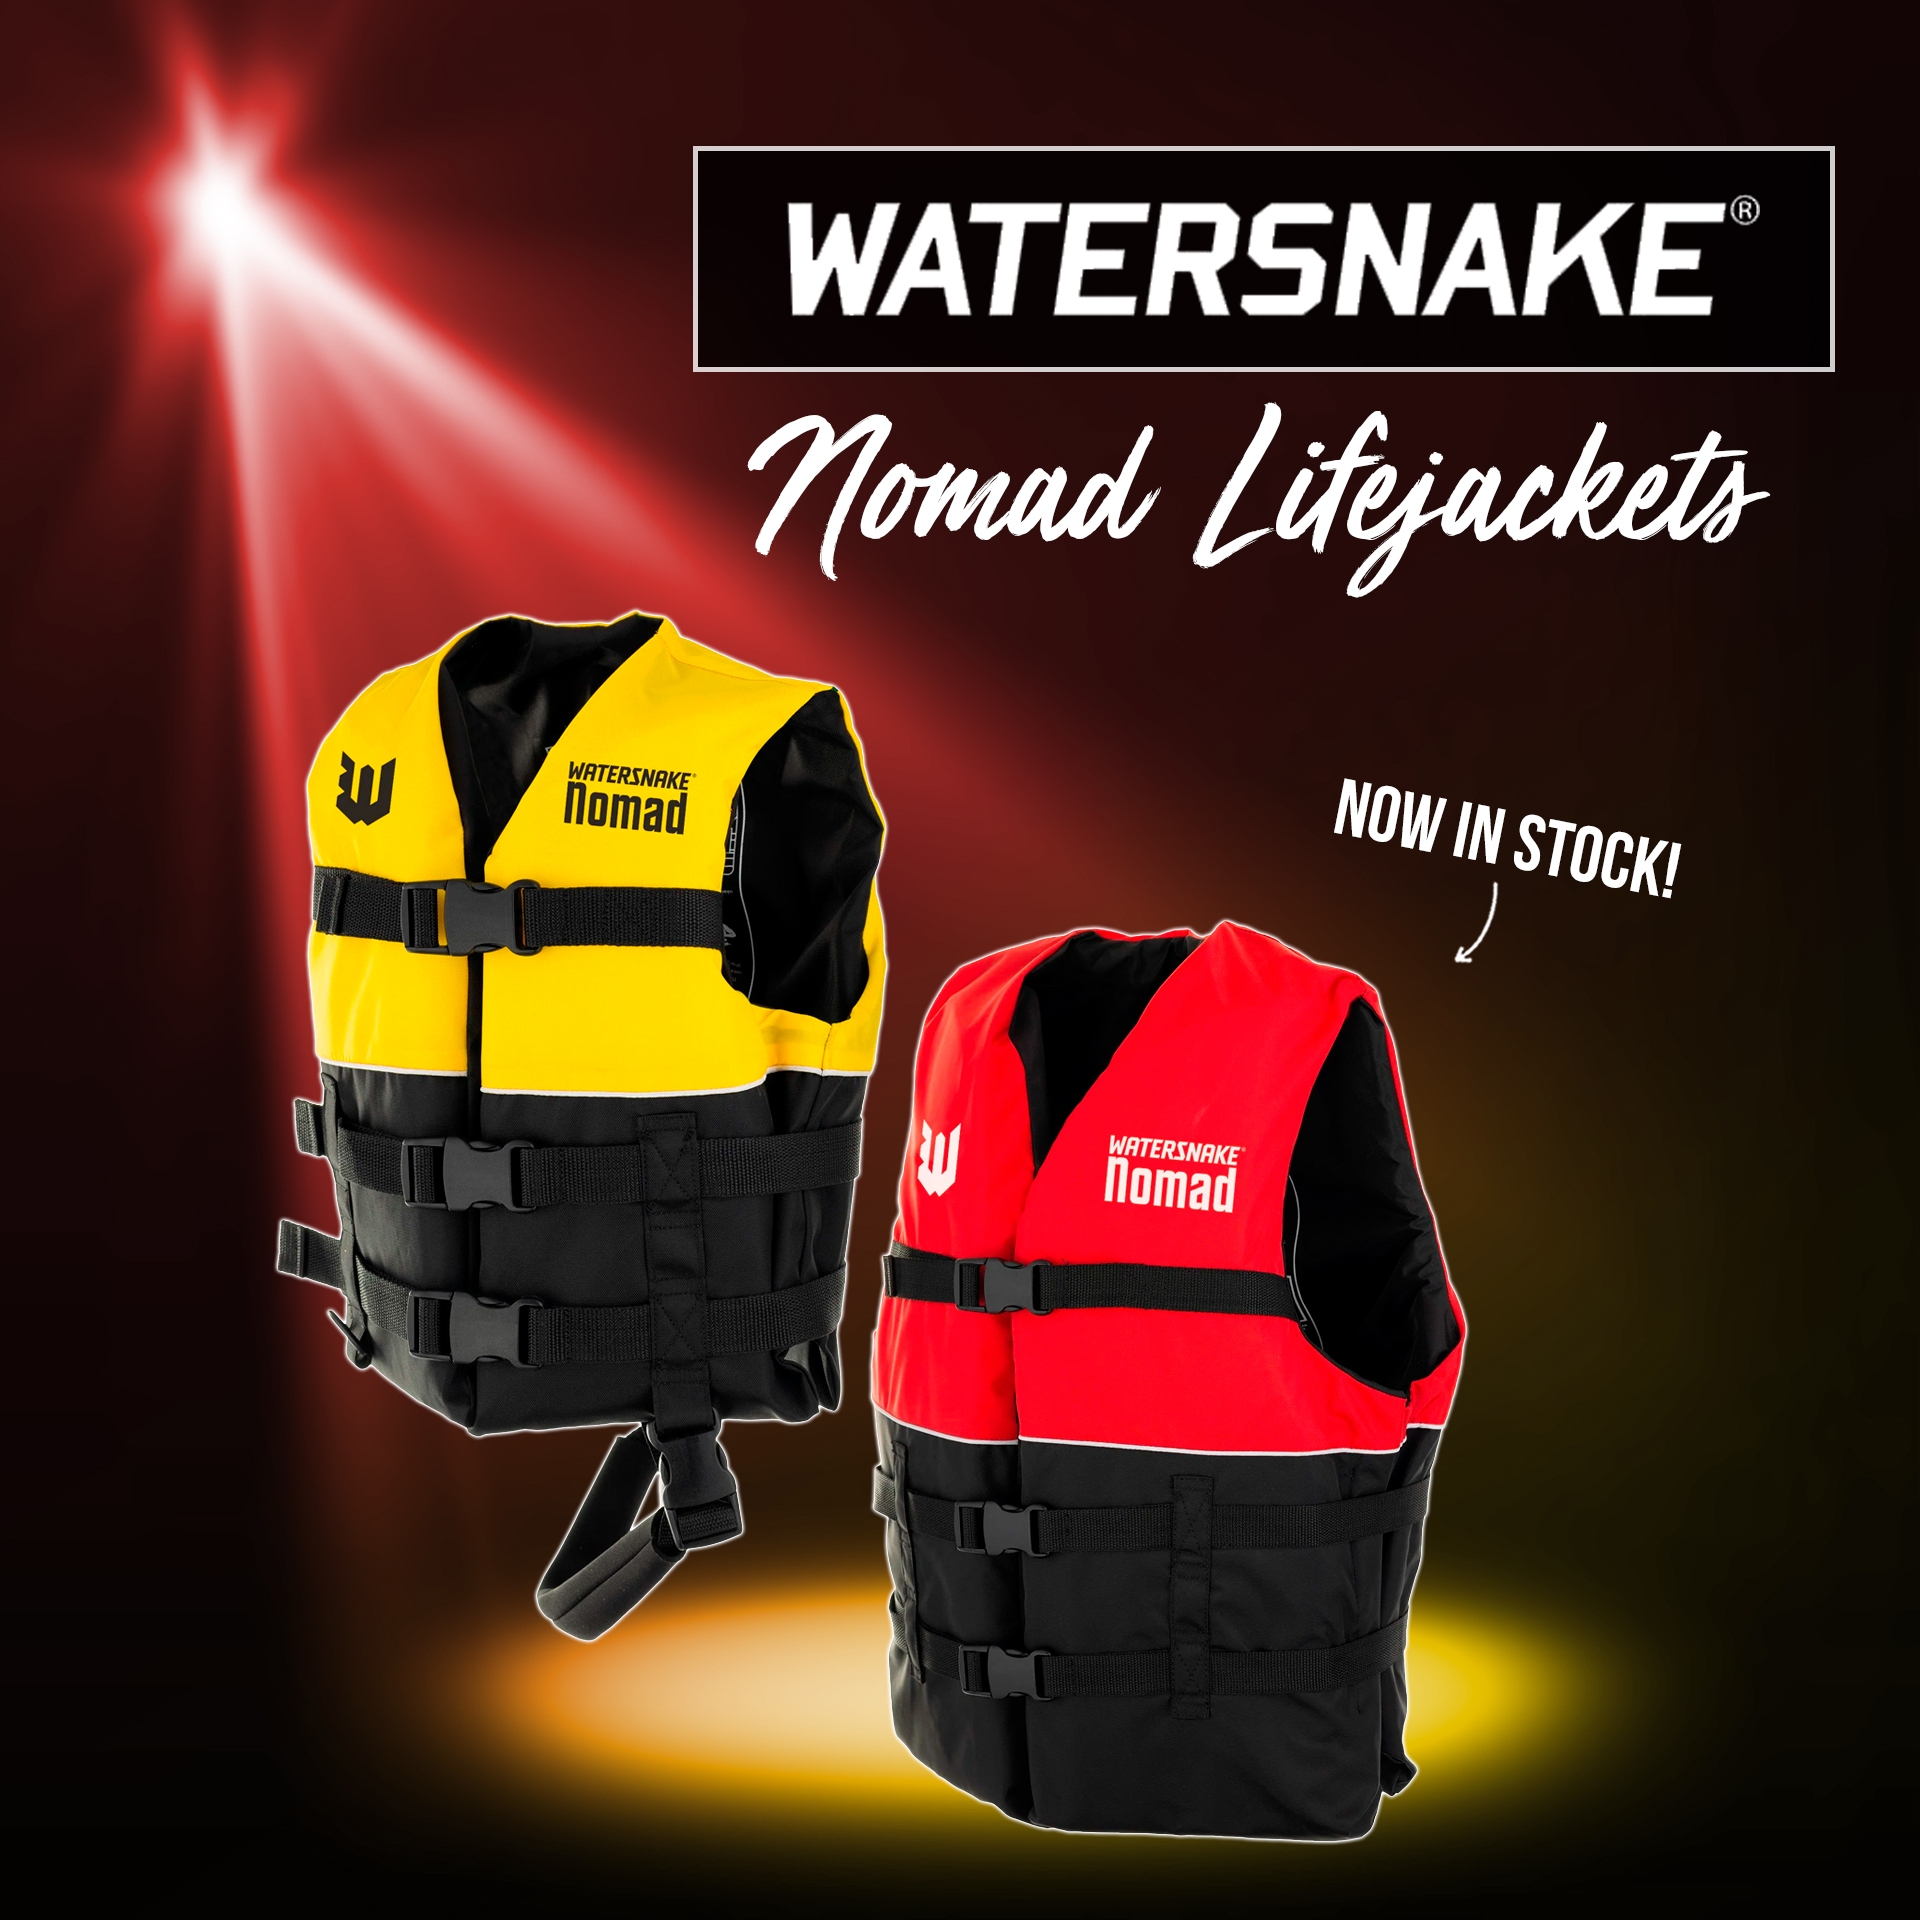 New - Watersnake Lifejackets